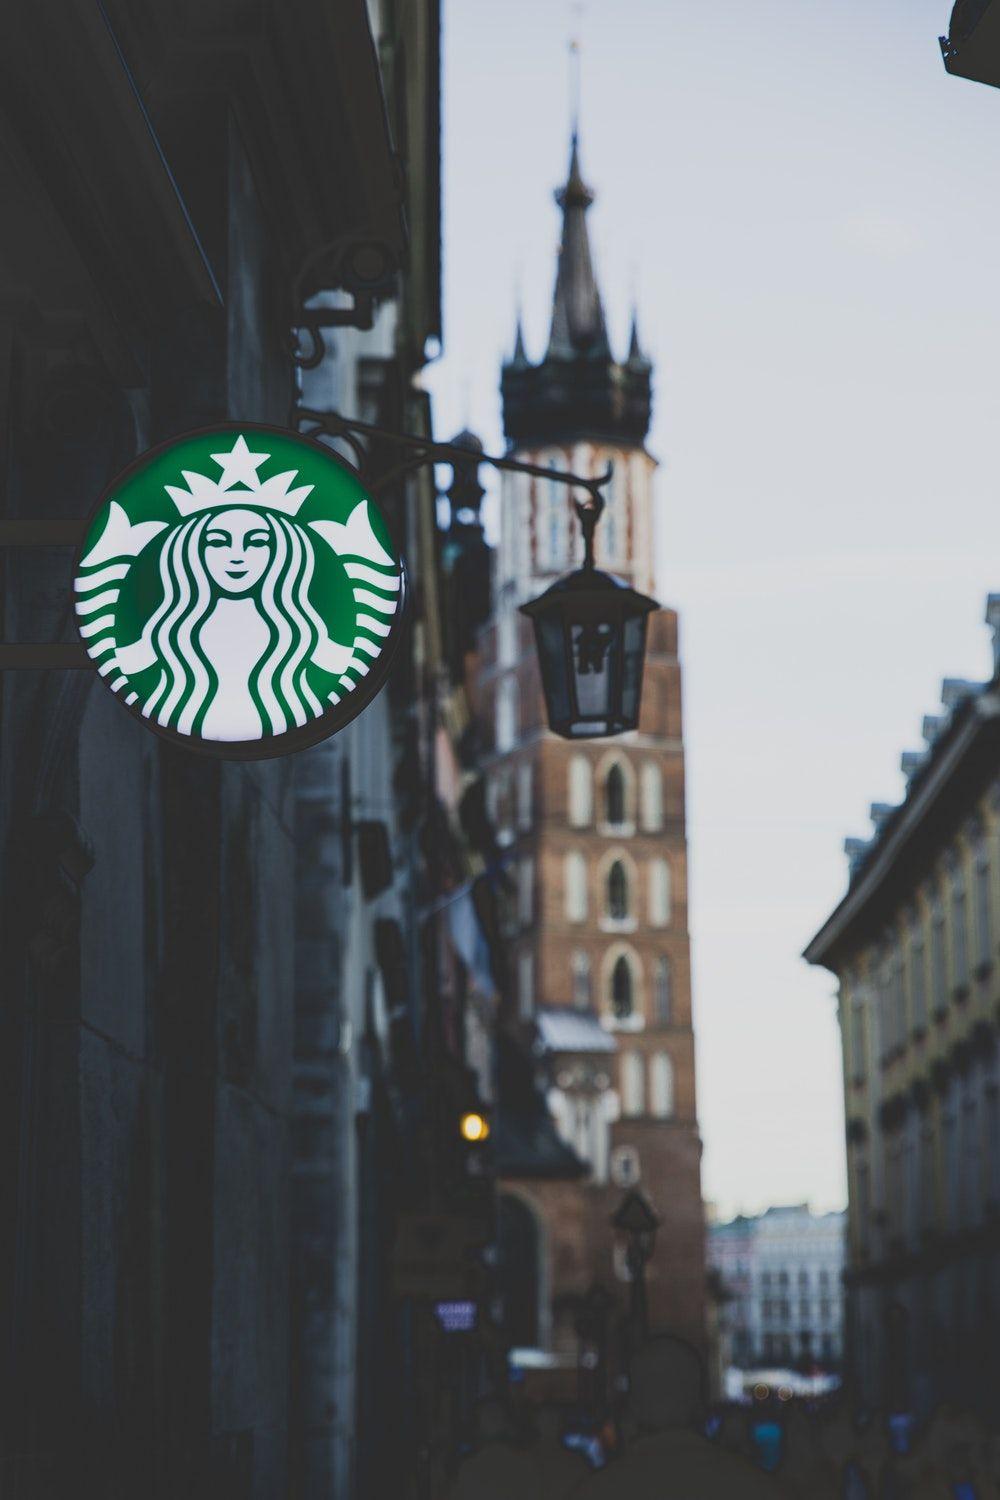 Starbucks Picture. Download Free Image